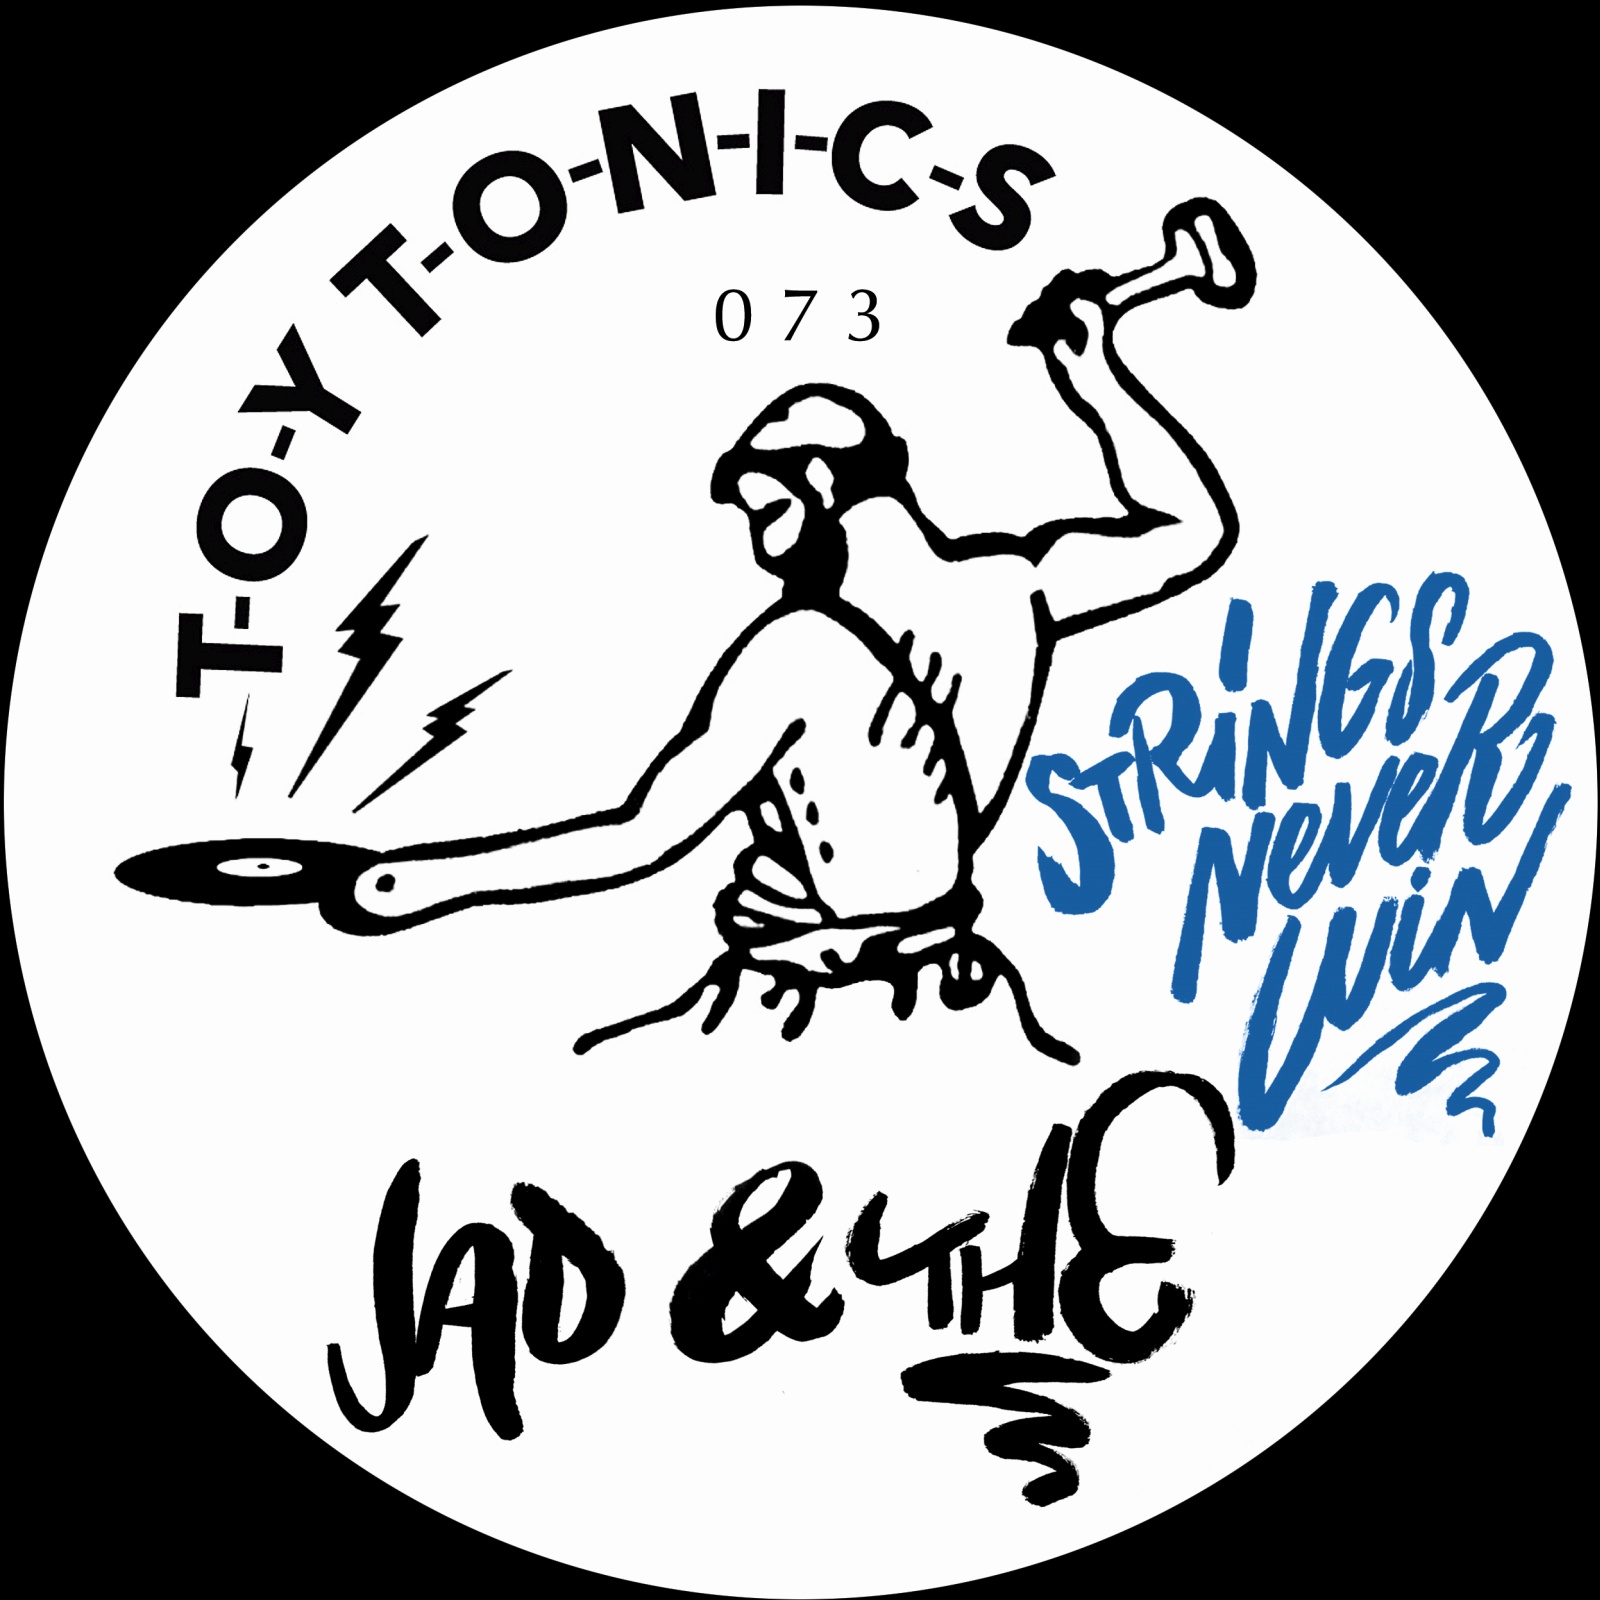 Jad & The - Strings Never Win [TOYT073]